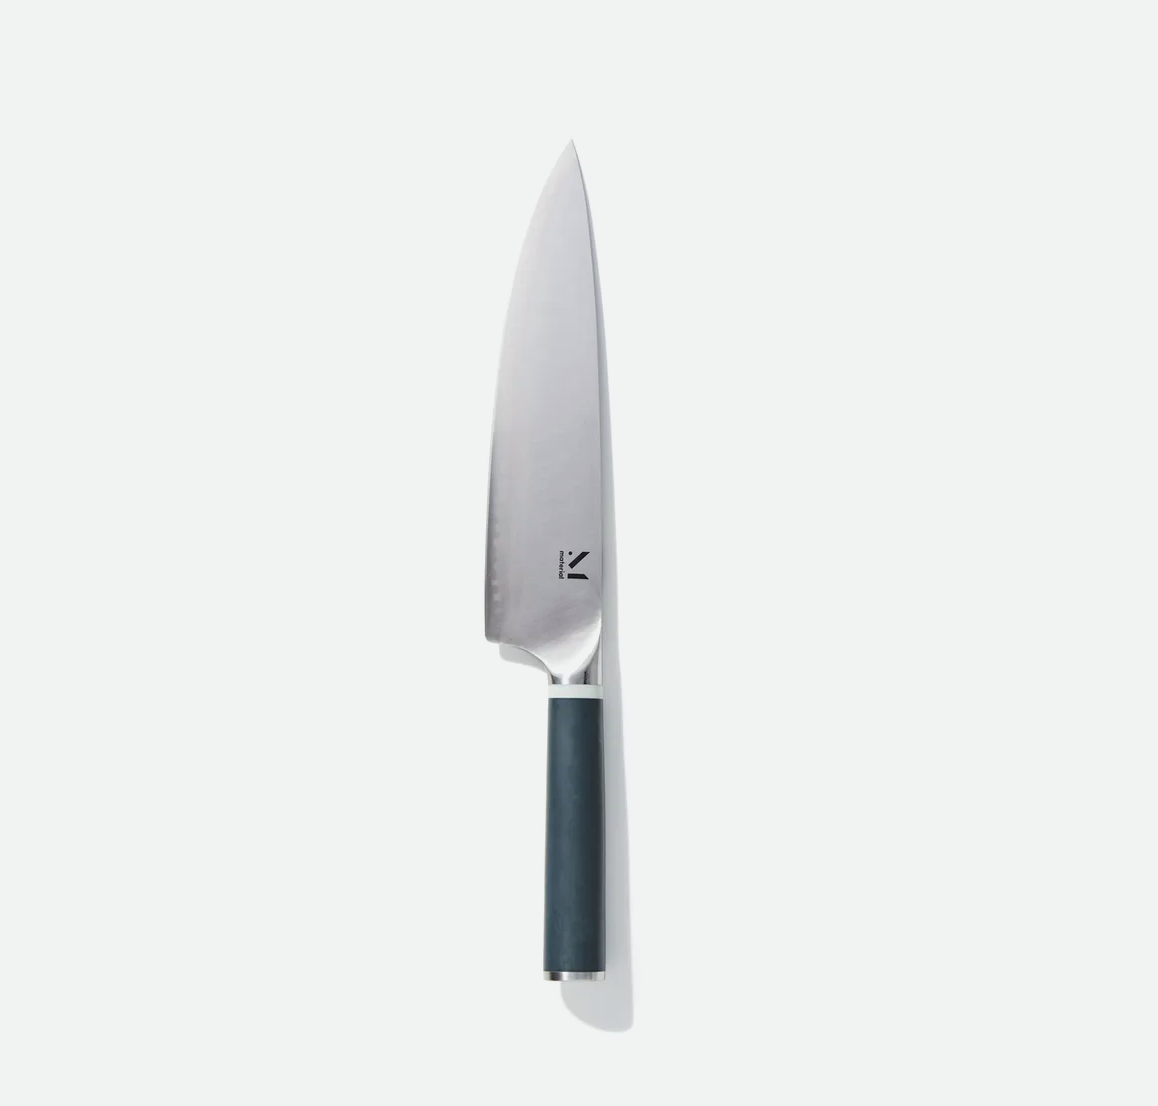 Huckberry Knife